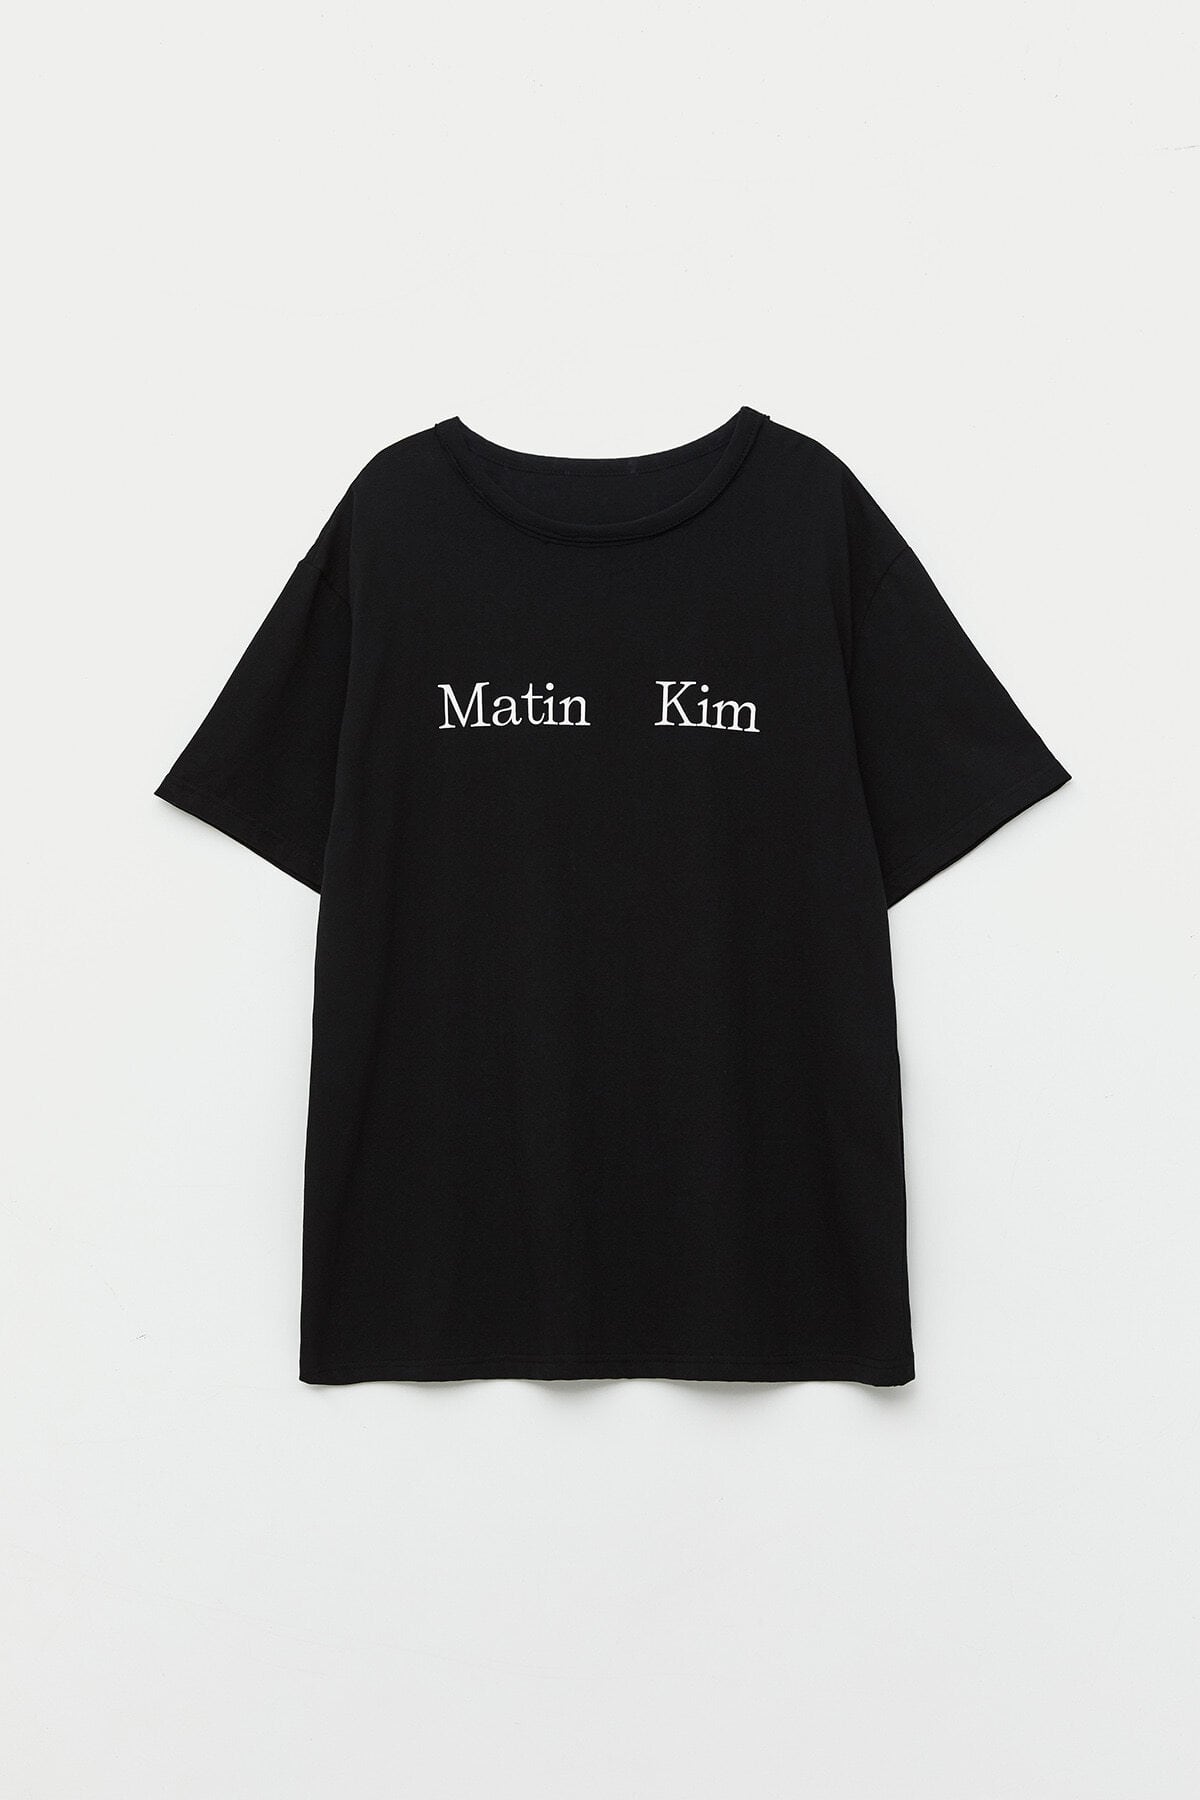 Matin Kim MATIN KIM LOGO T-SHIRT WM1514 マーティンキム Tシャツ ...